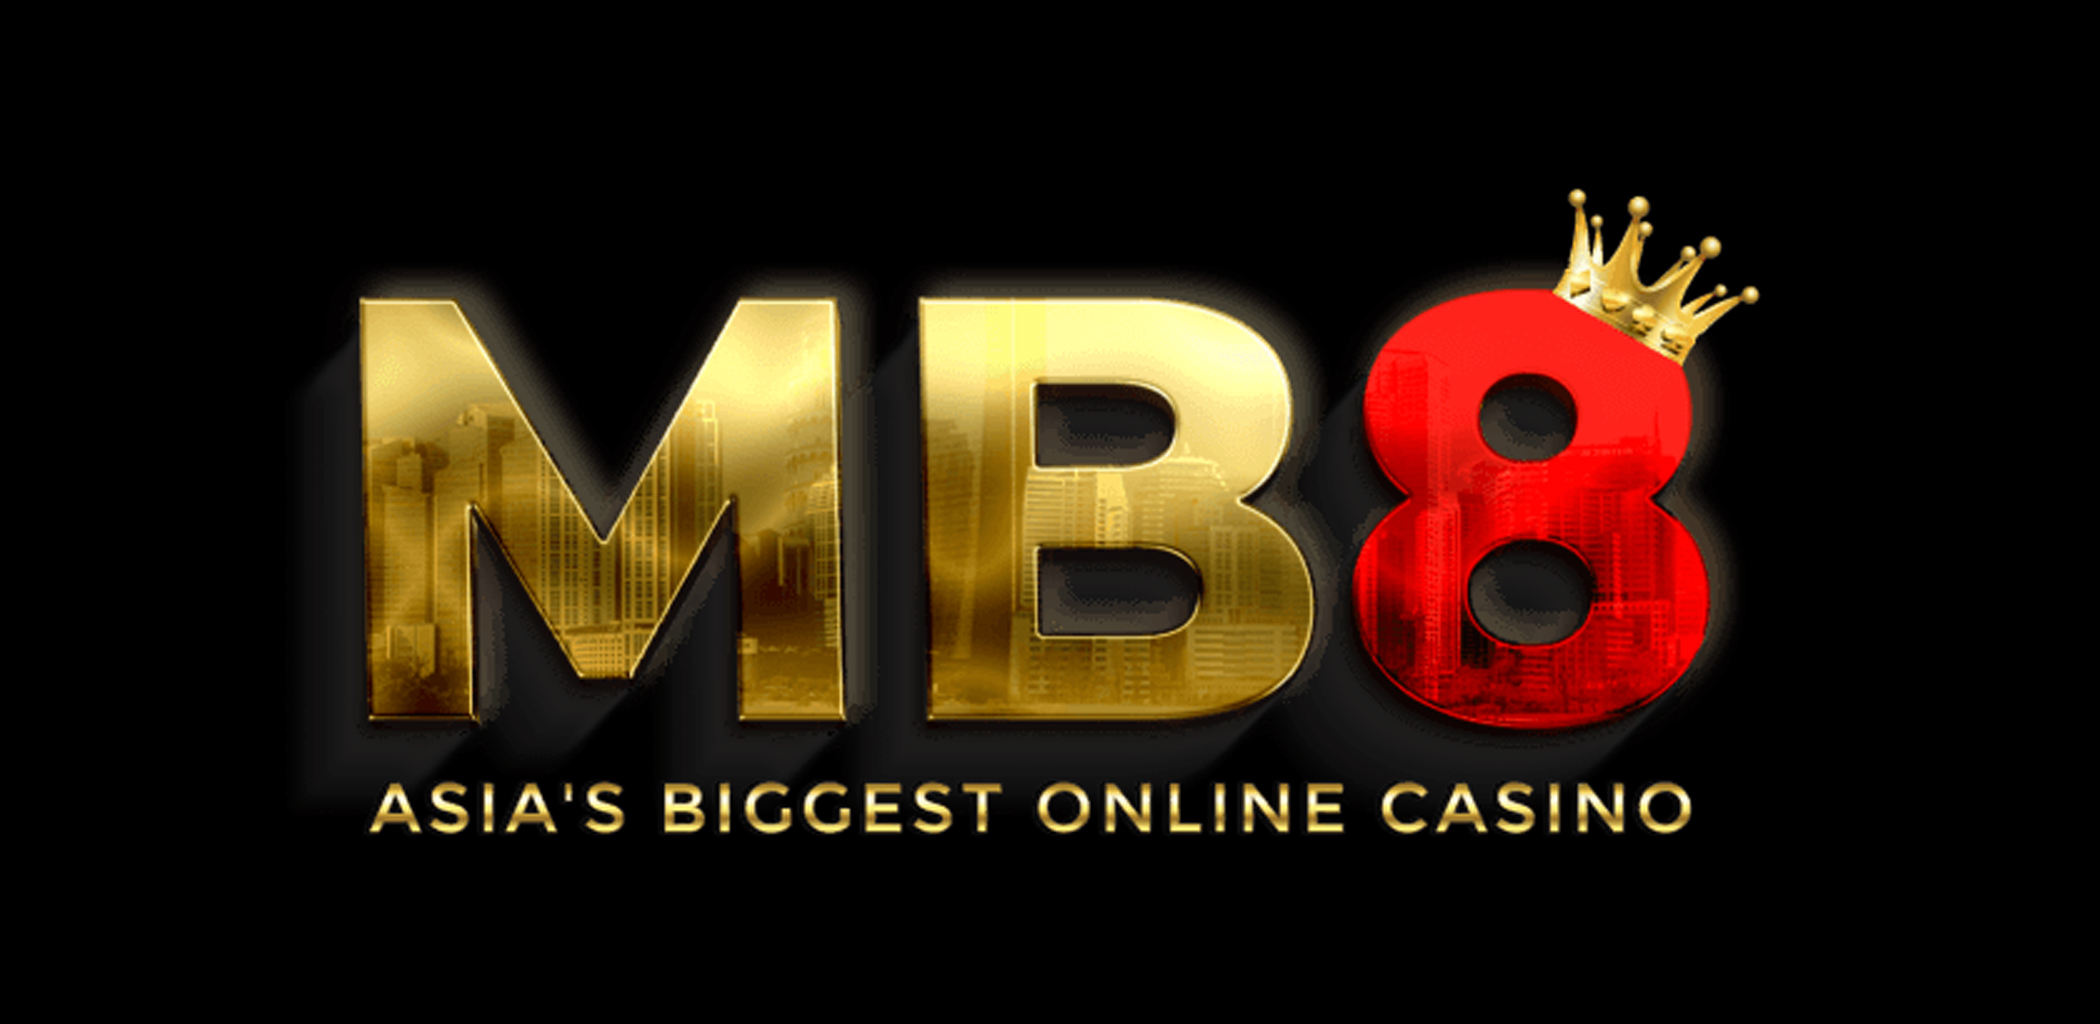 mb8 mbb88 review - mb88 logo - Gamblingonline.asia online casino Malaysia review